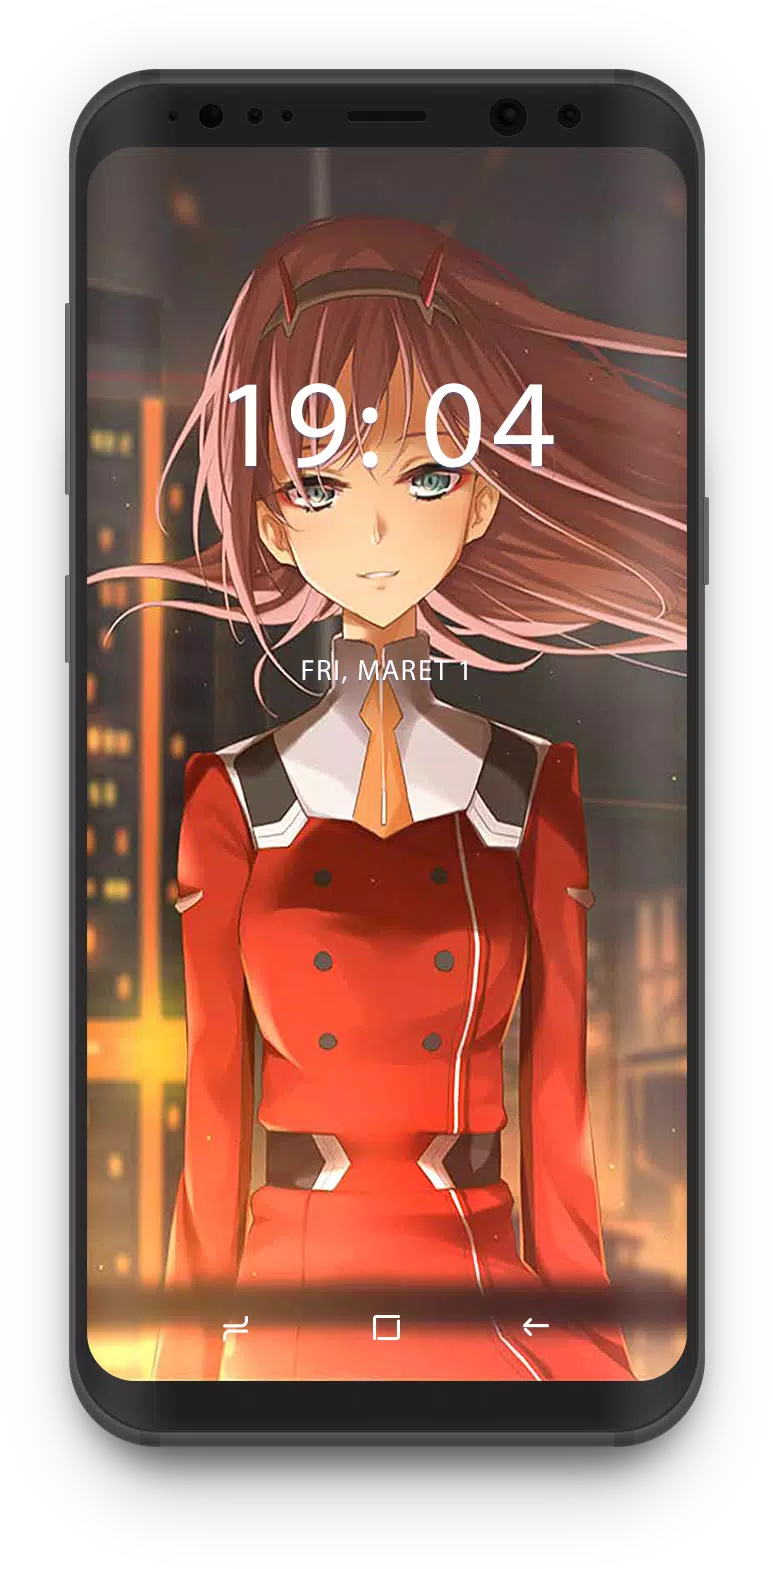 Zero Two Anime wallpaper hd 4k - Apps on Google Play